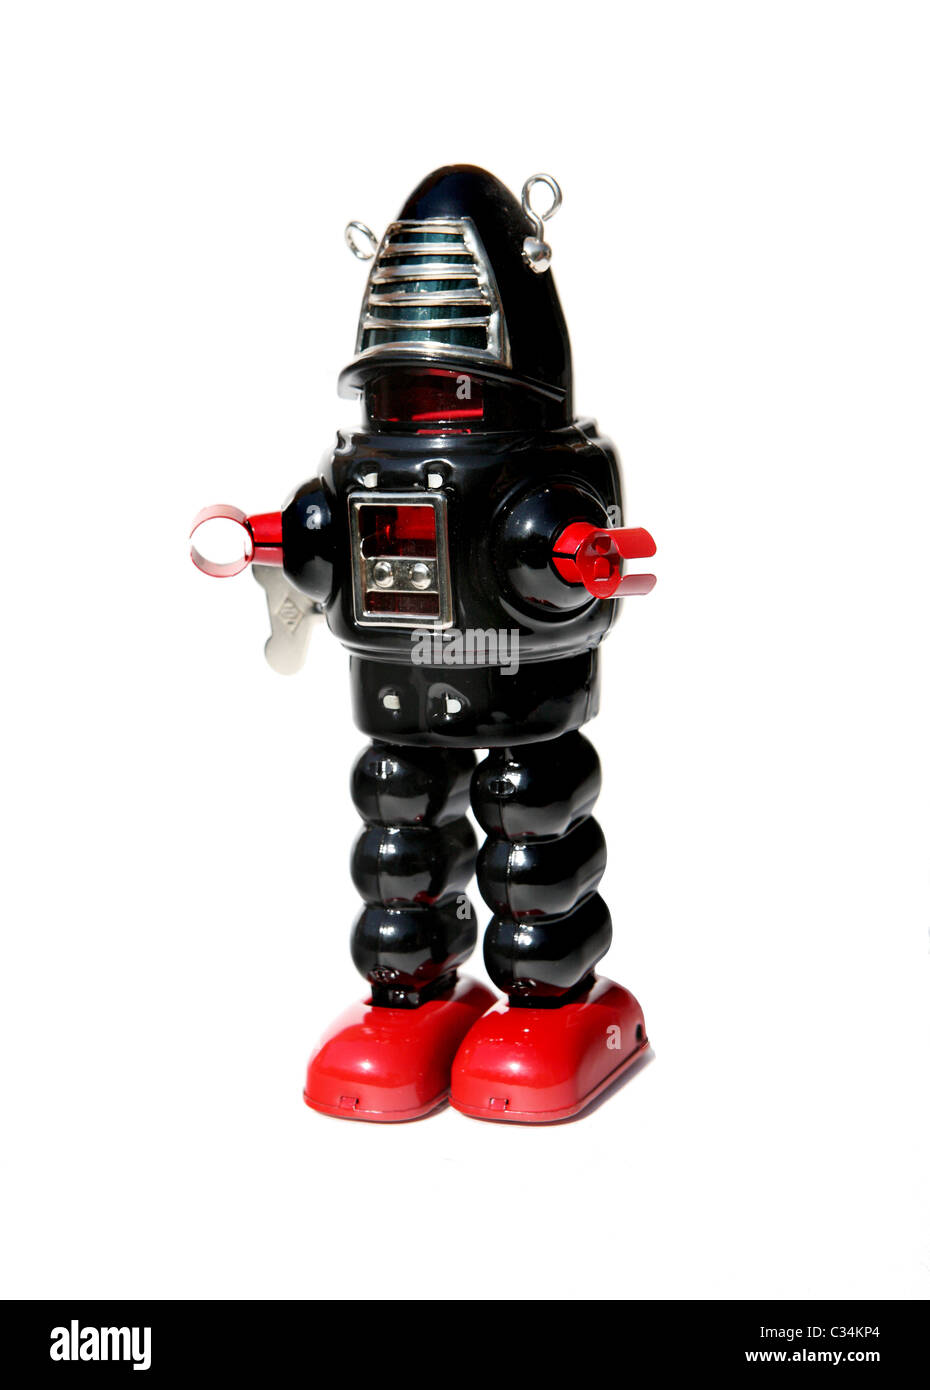 Black clockwork robot toy Stock Photo